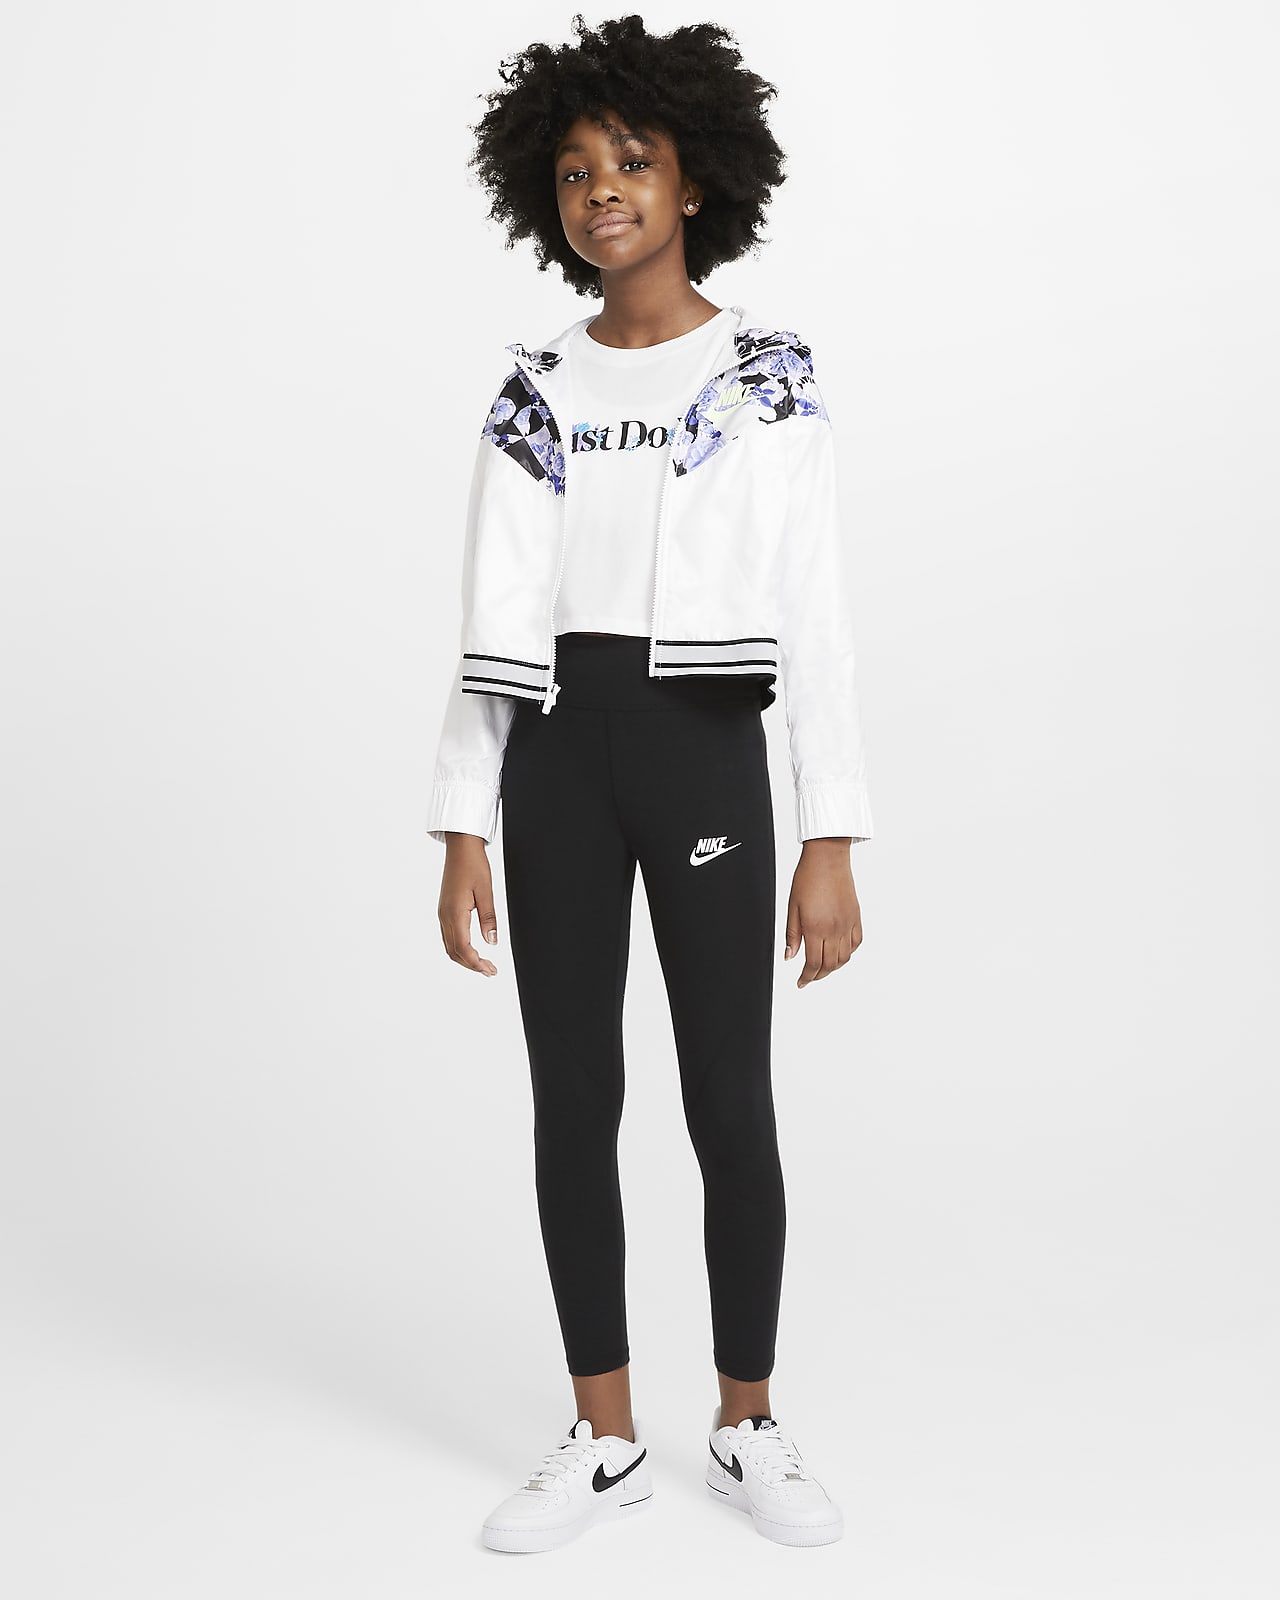 Girls' trousers Nike Kids Sportswear Favorites High-Waist Leggings - court  blue/white, Tennis Zone